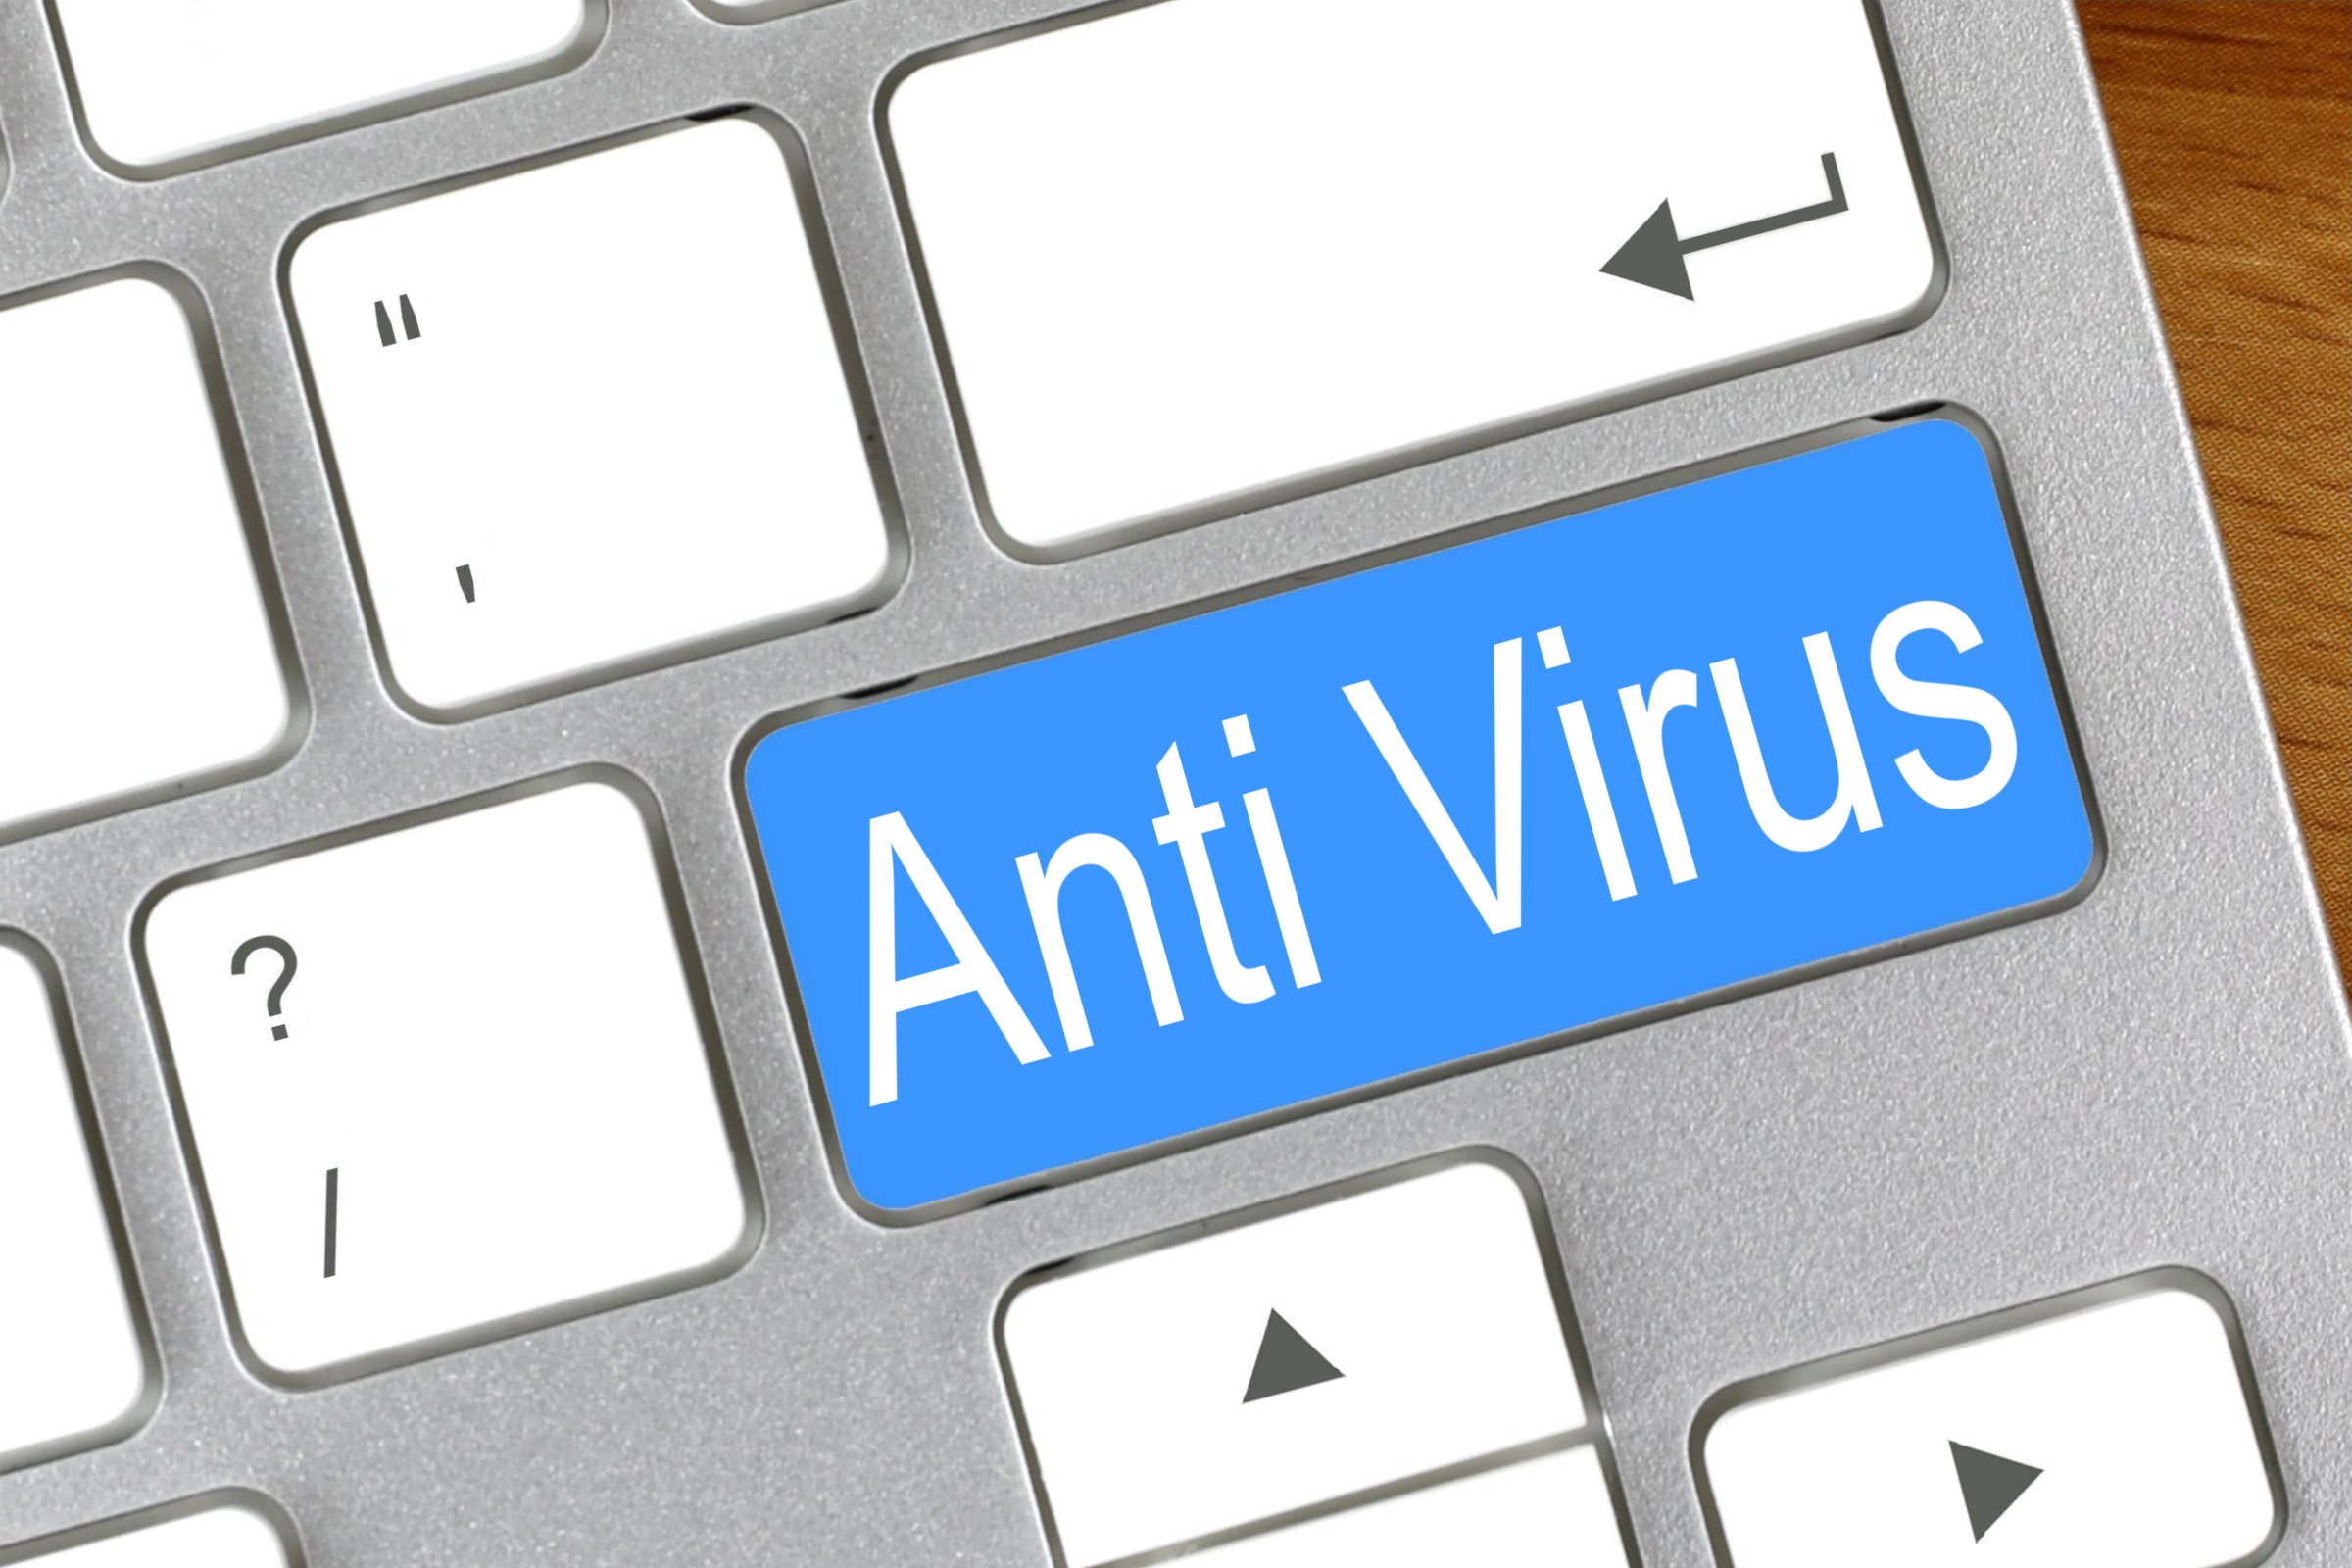 Antivirus Software for Businesses